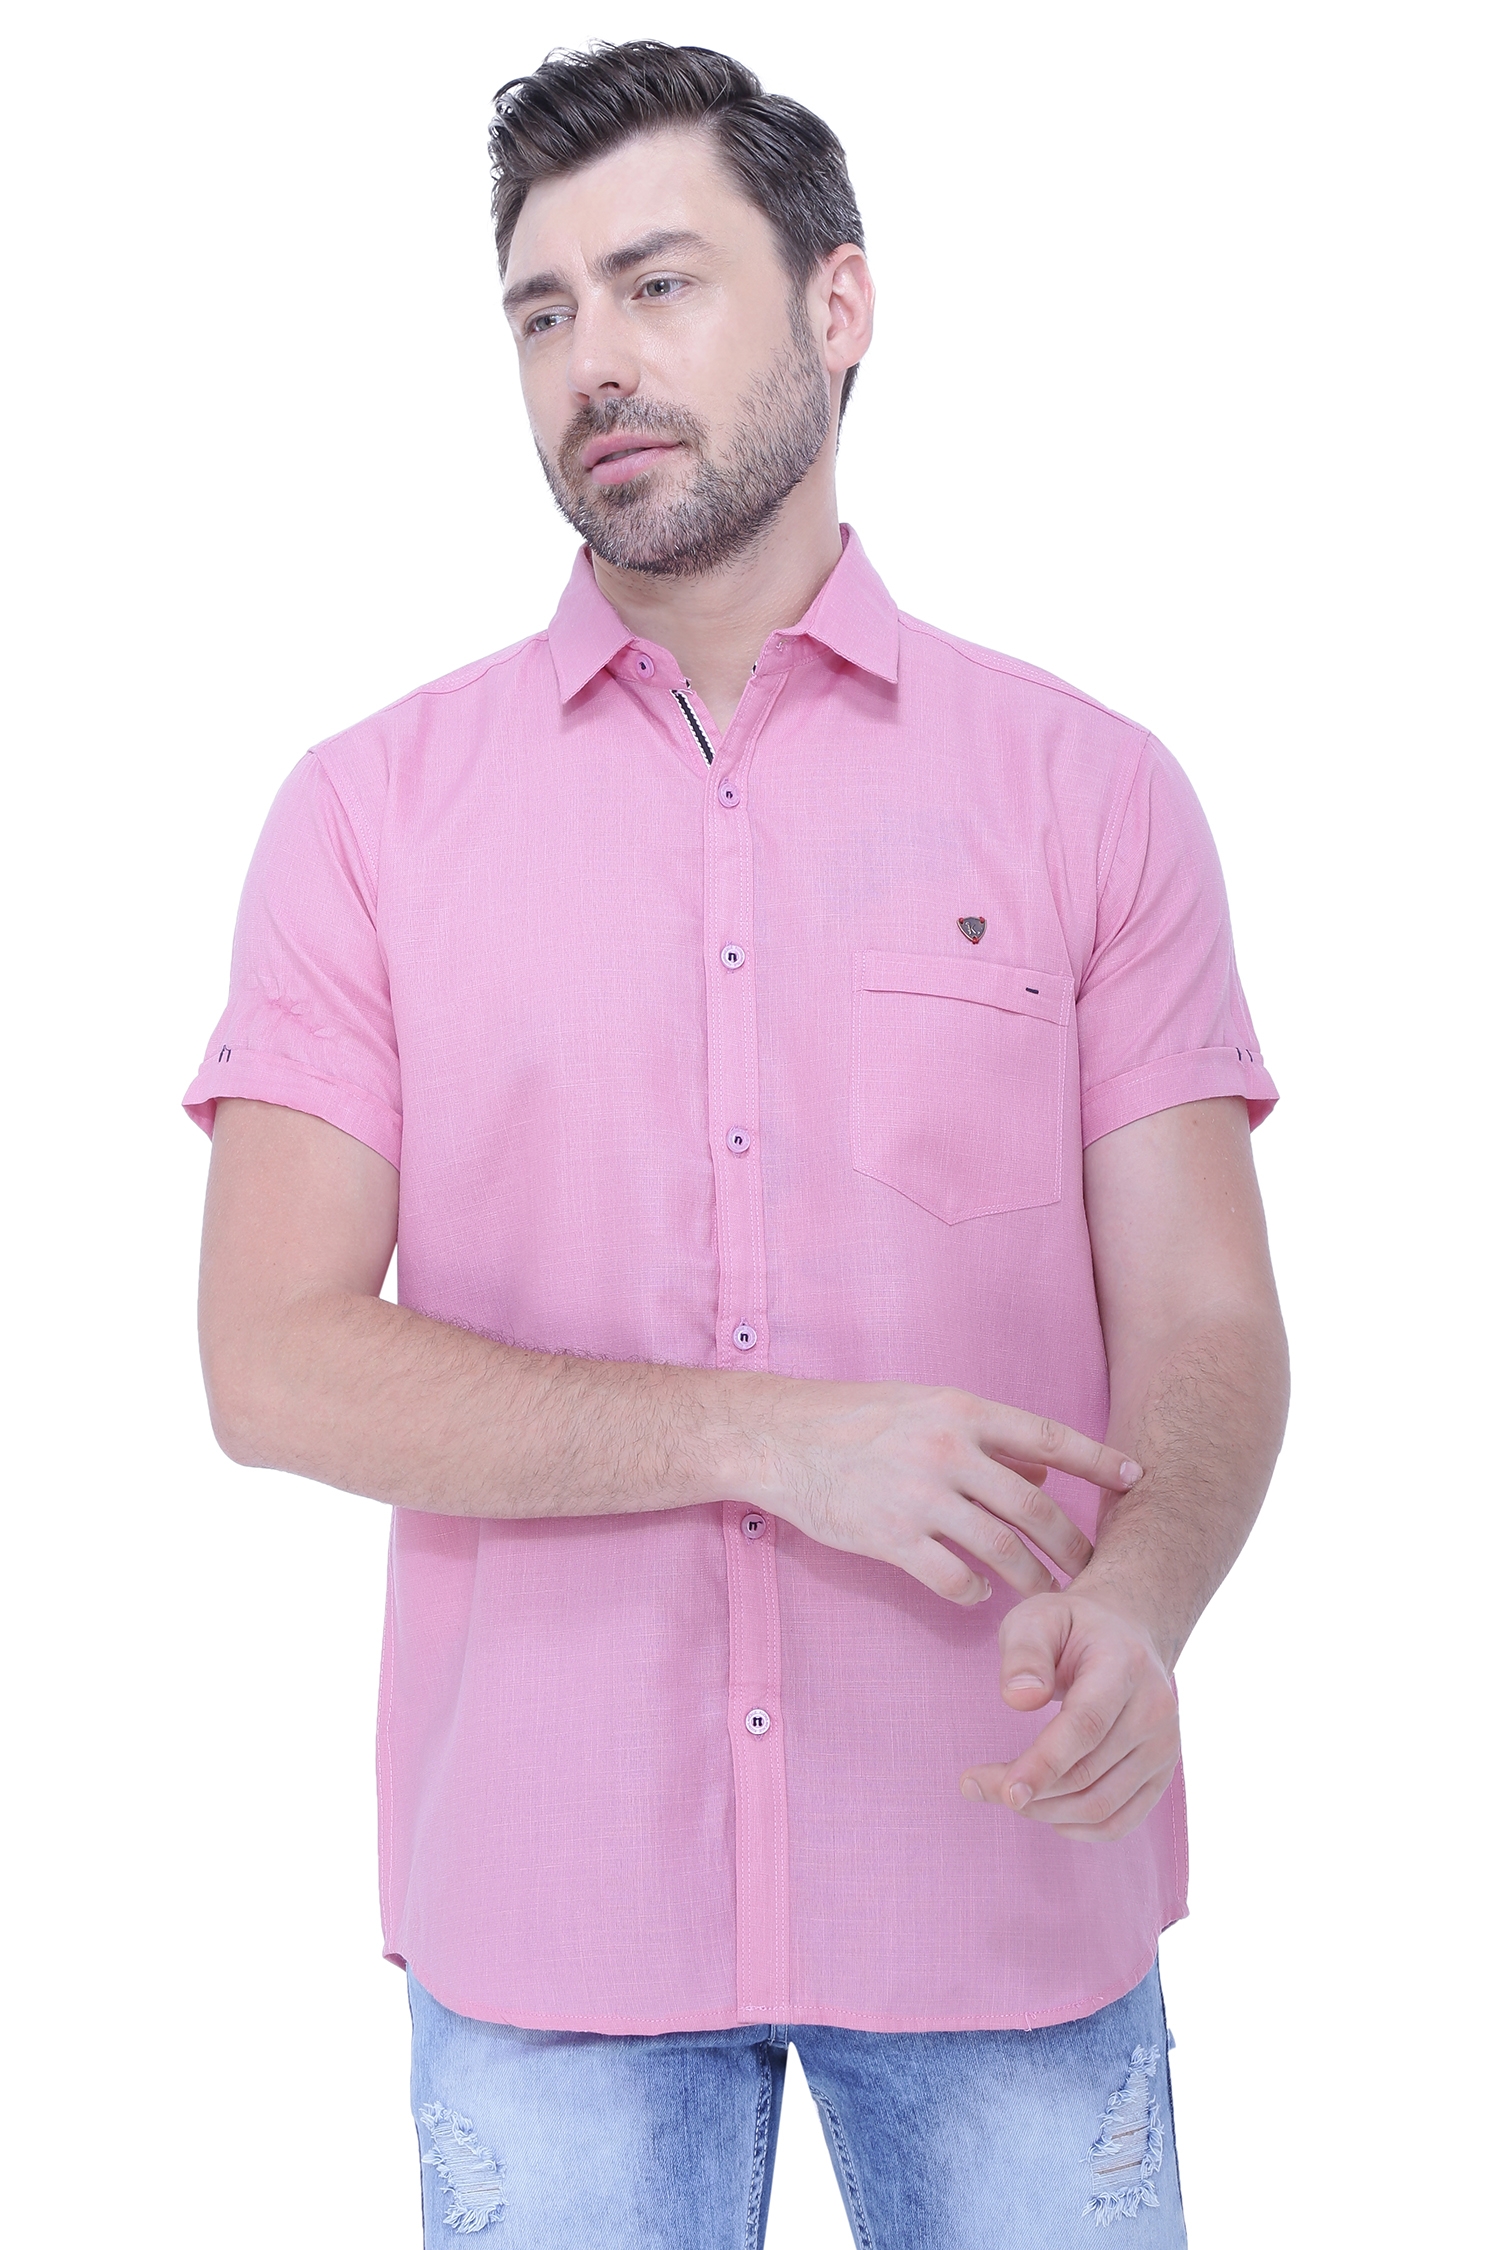 Kuons Avenue | Kuons Avenue Men's Linen Blend Half Sleeves Casual Shirt-KACLHS1232